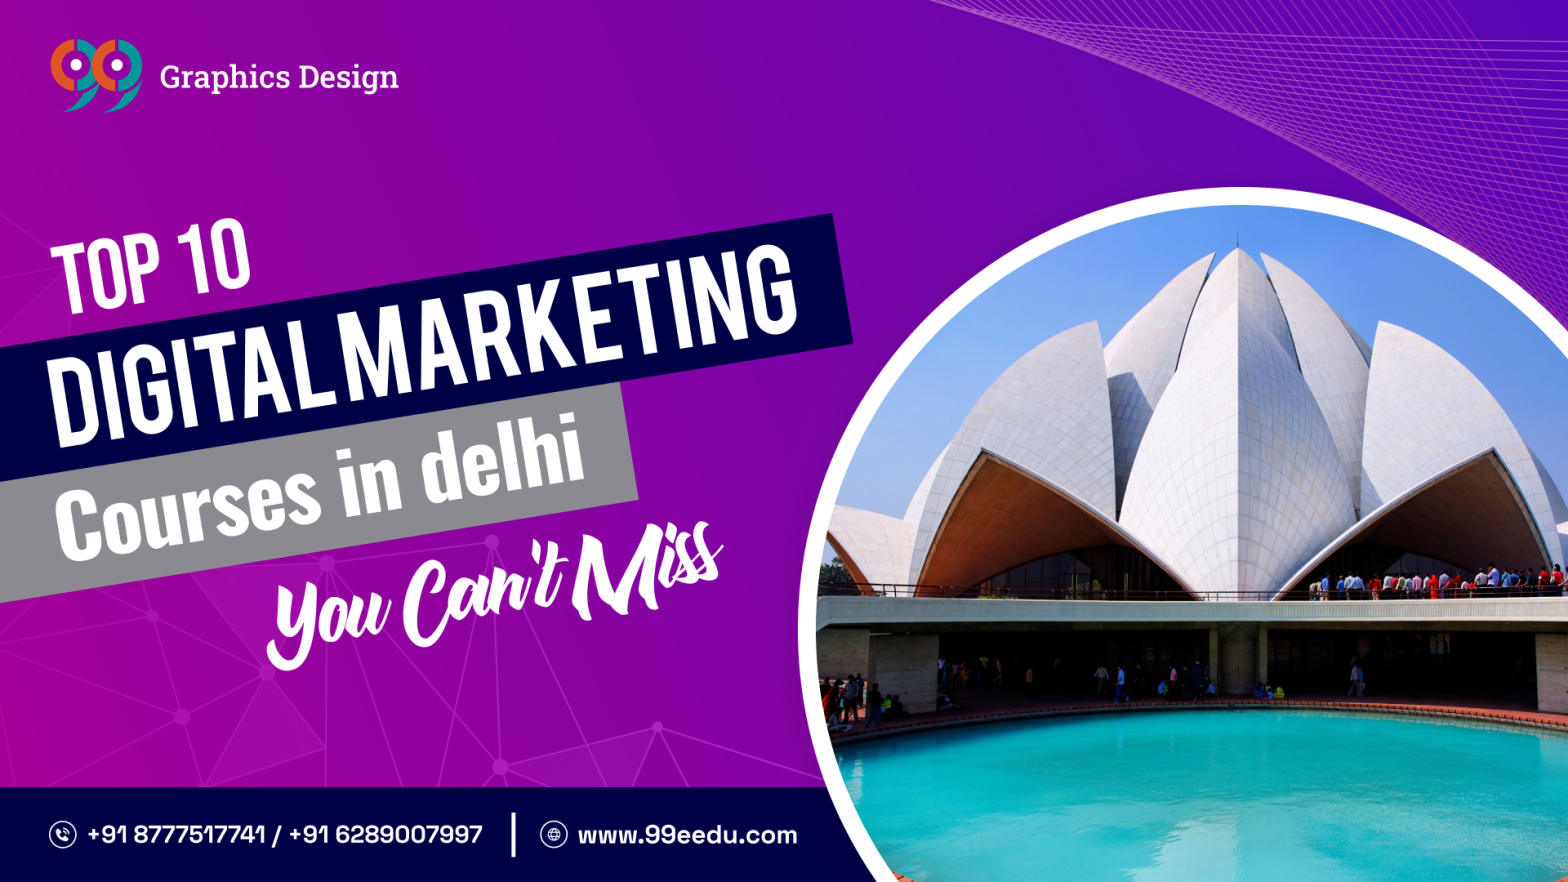 Digital marketing course in Delhi